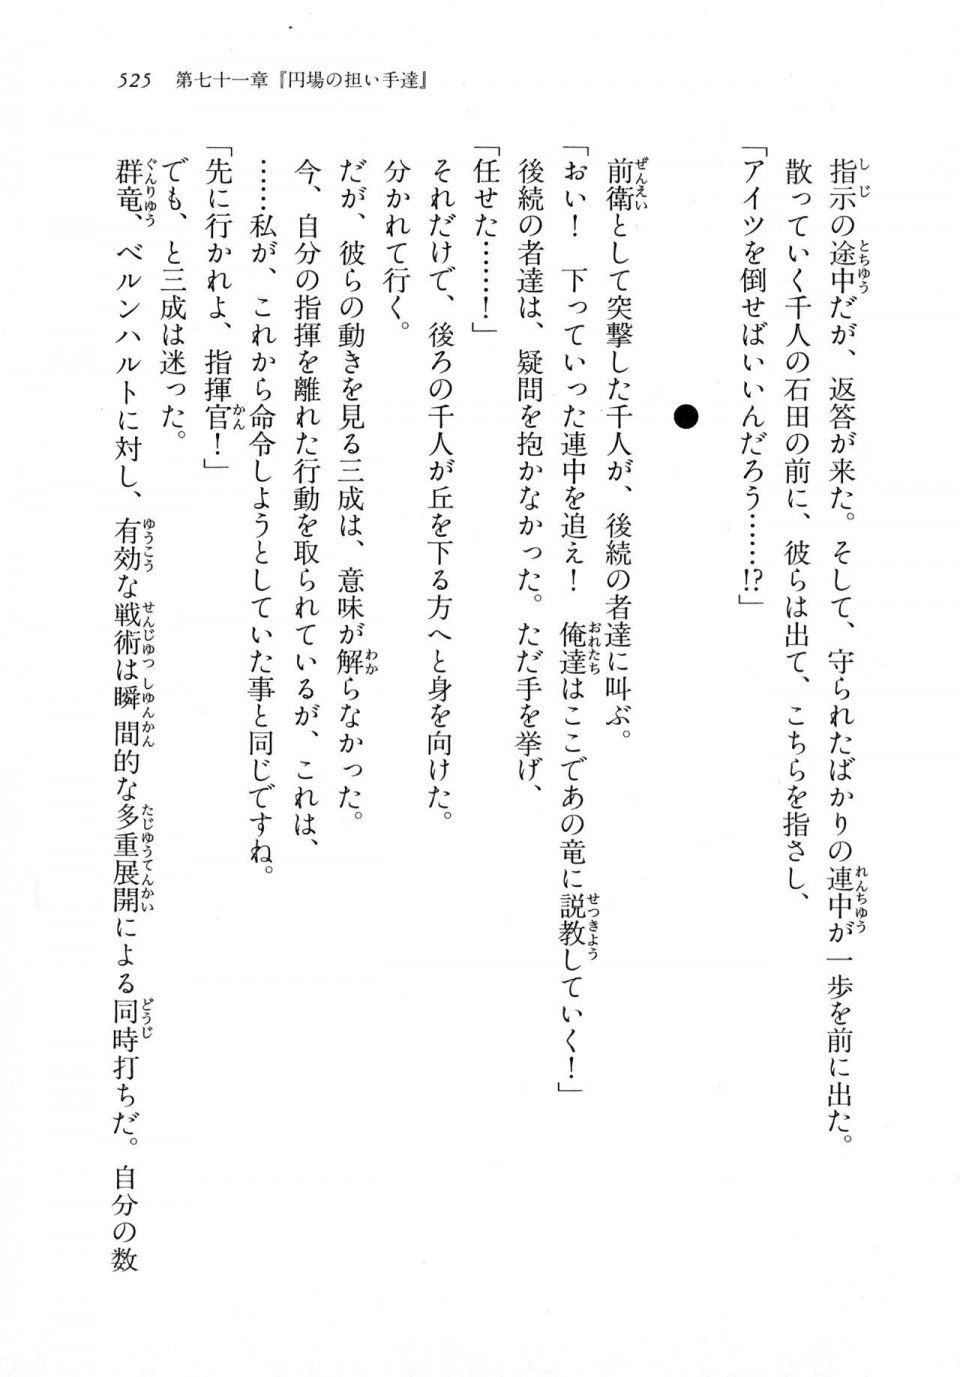 Kyoukai Senjou no Horizon LN Vol 18(7C) Part 1 - Photo #525